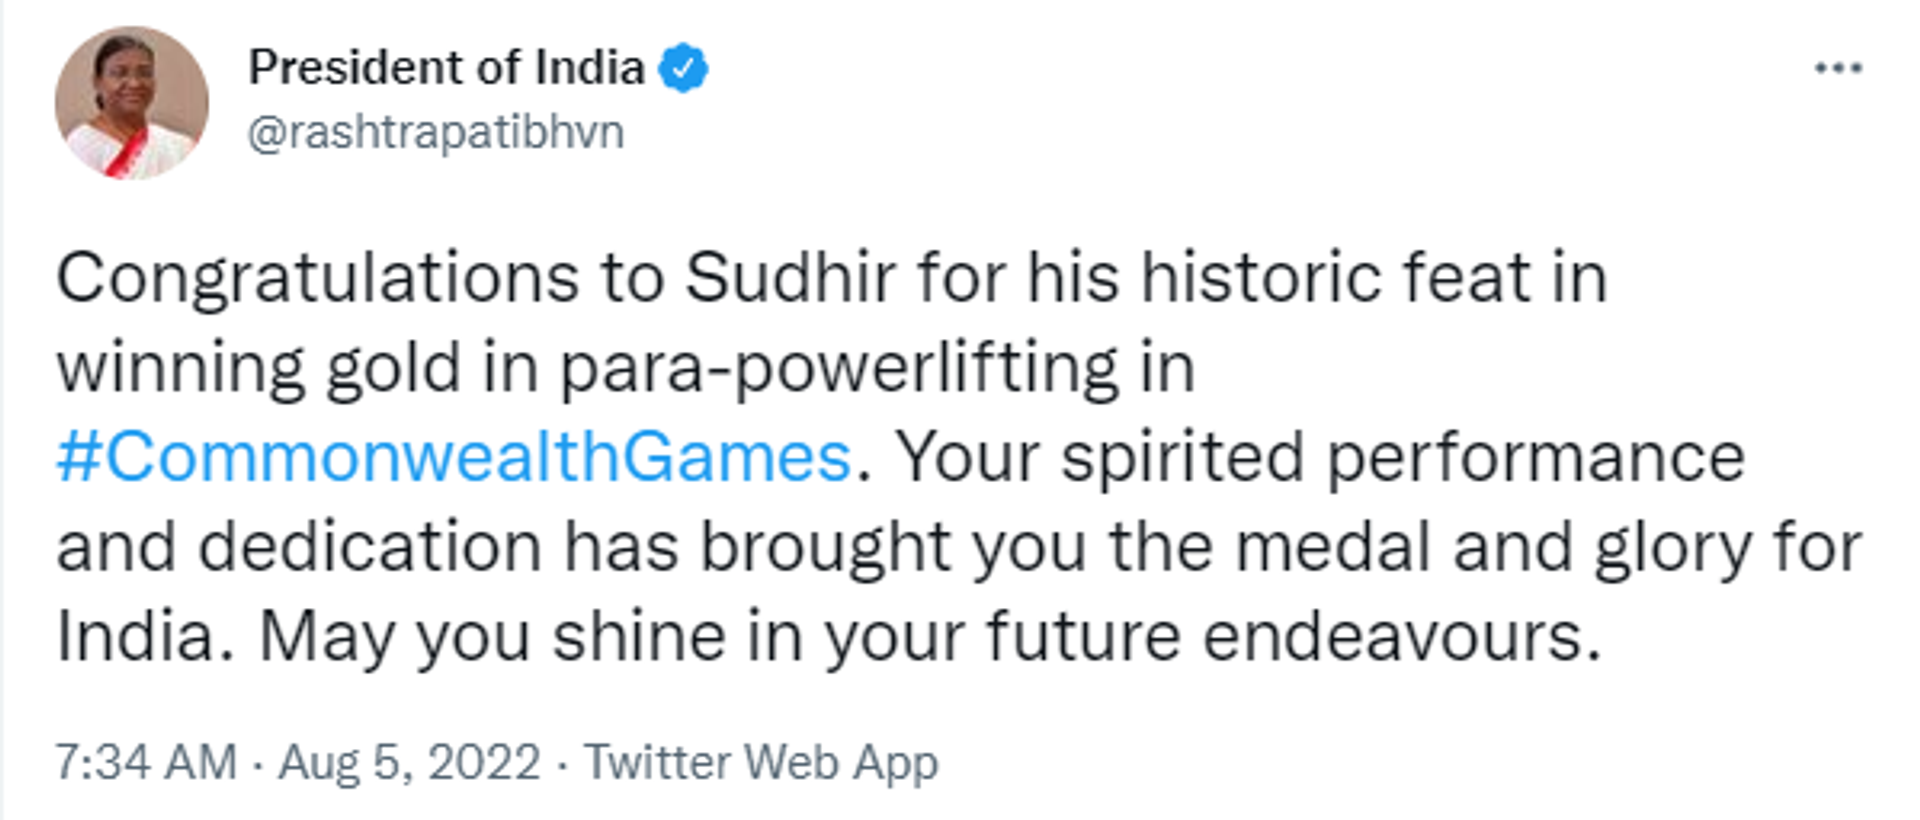 President Draupadi Murmu Congratulated Sudhir for Winning Historic Gold Medal at Commonwealth Games - Sputnik International, 1920, 05.08.2022